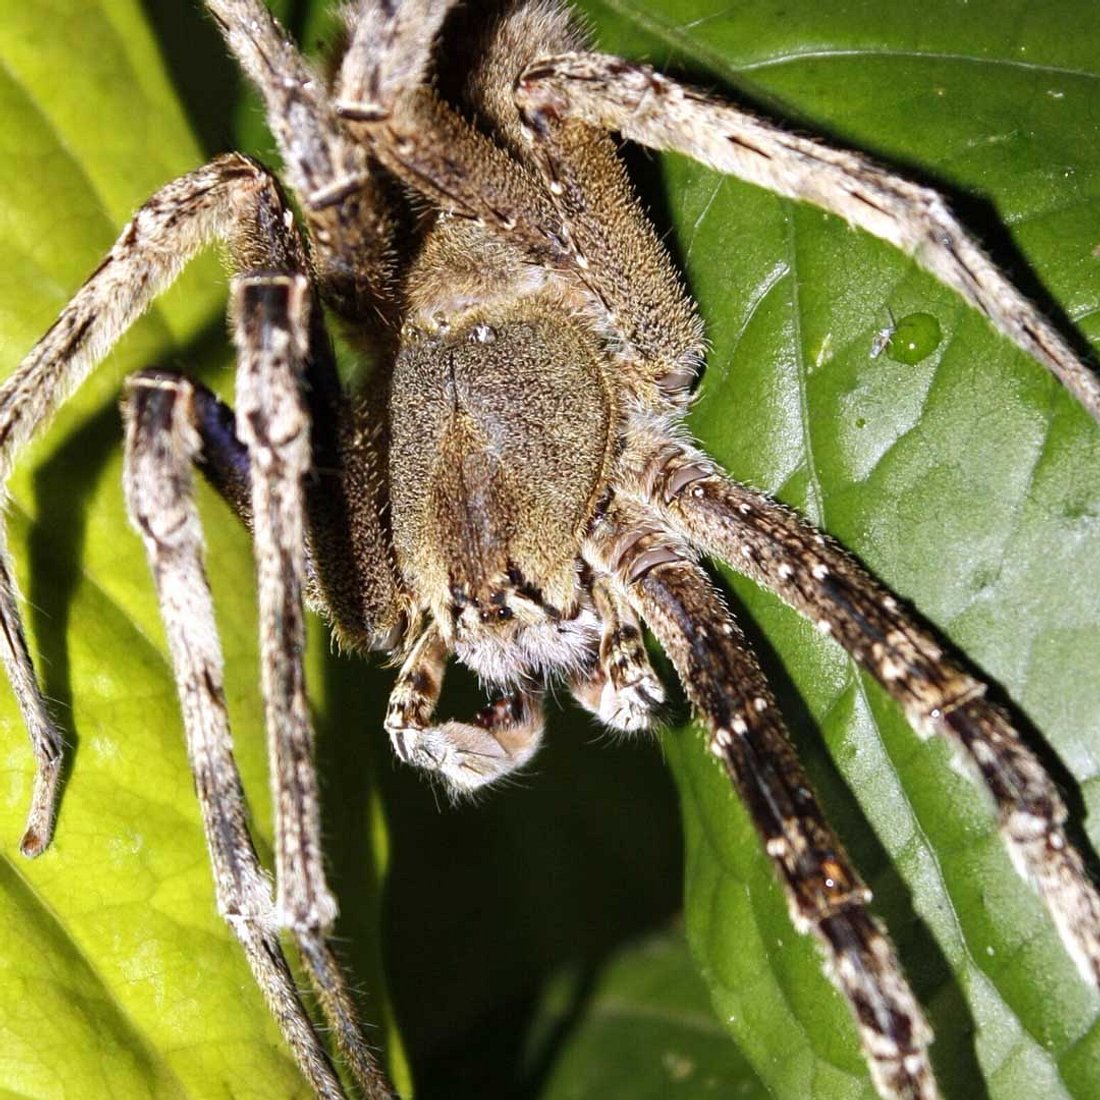 Größte Spinne der Welt in Australien entdeckt